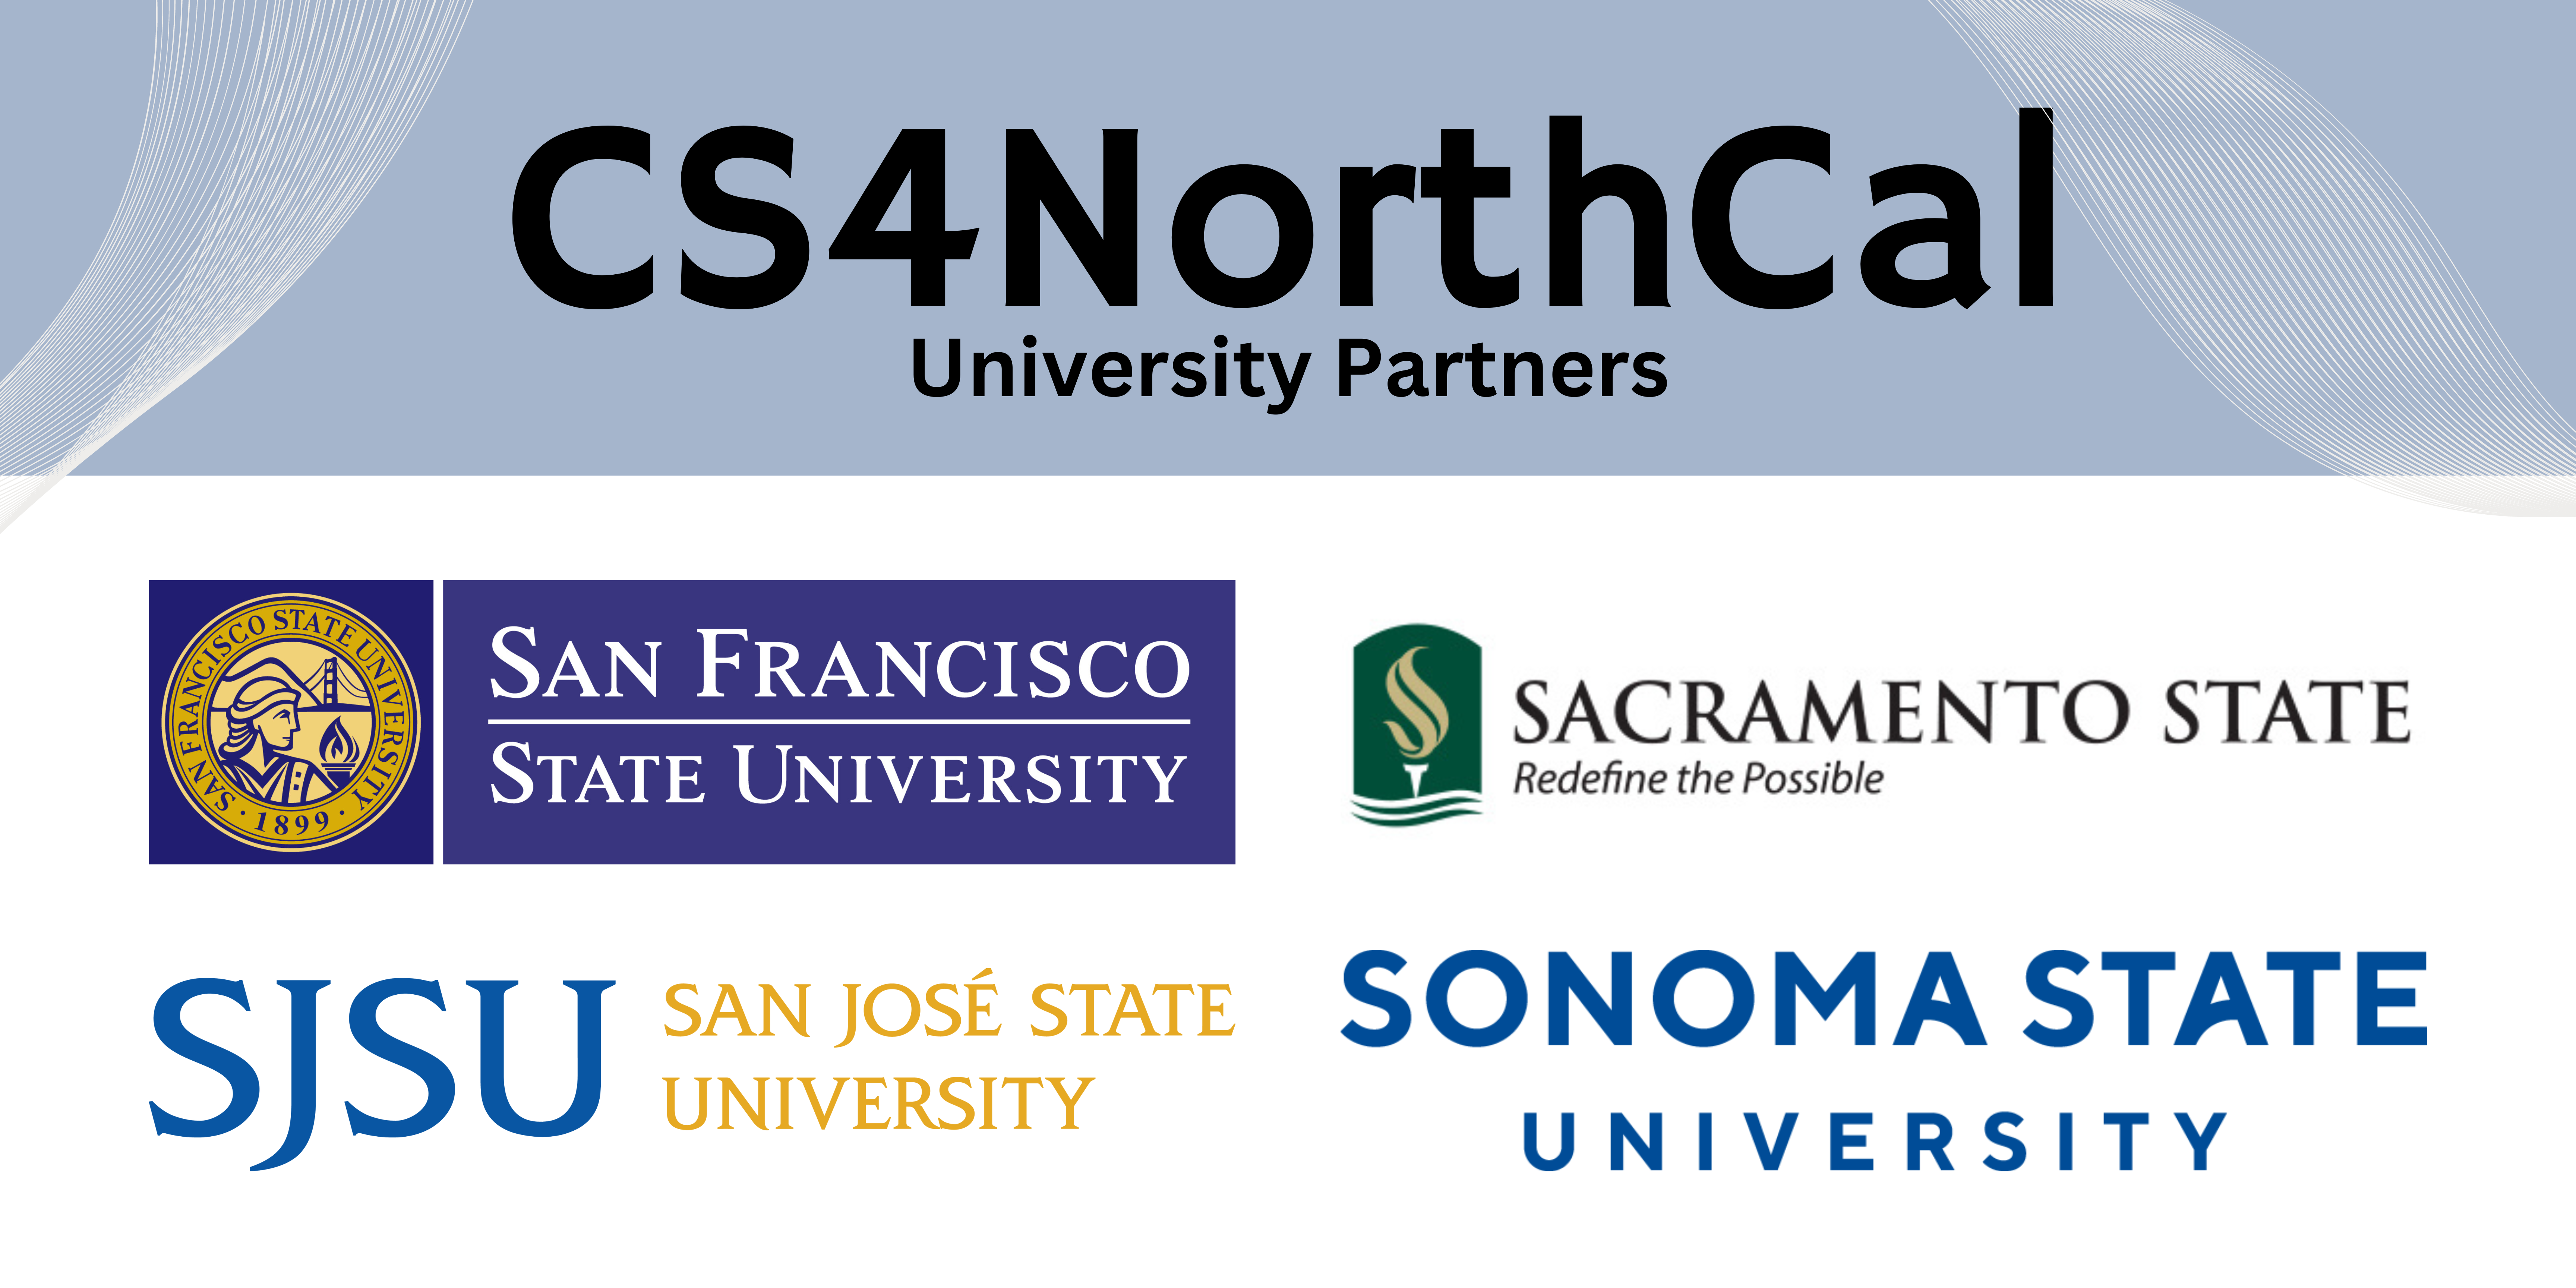 CS4NorthCal University Partners